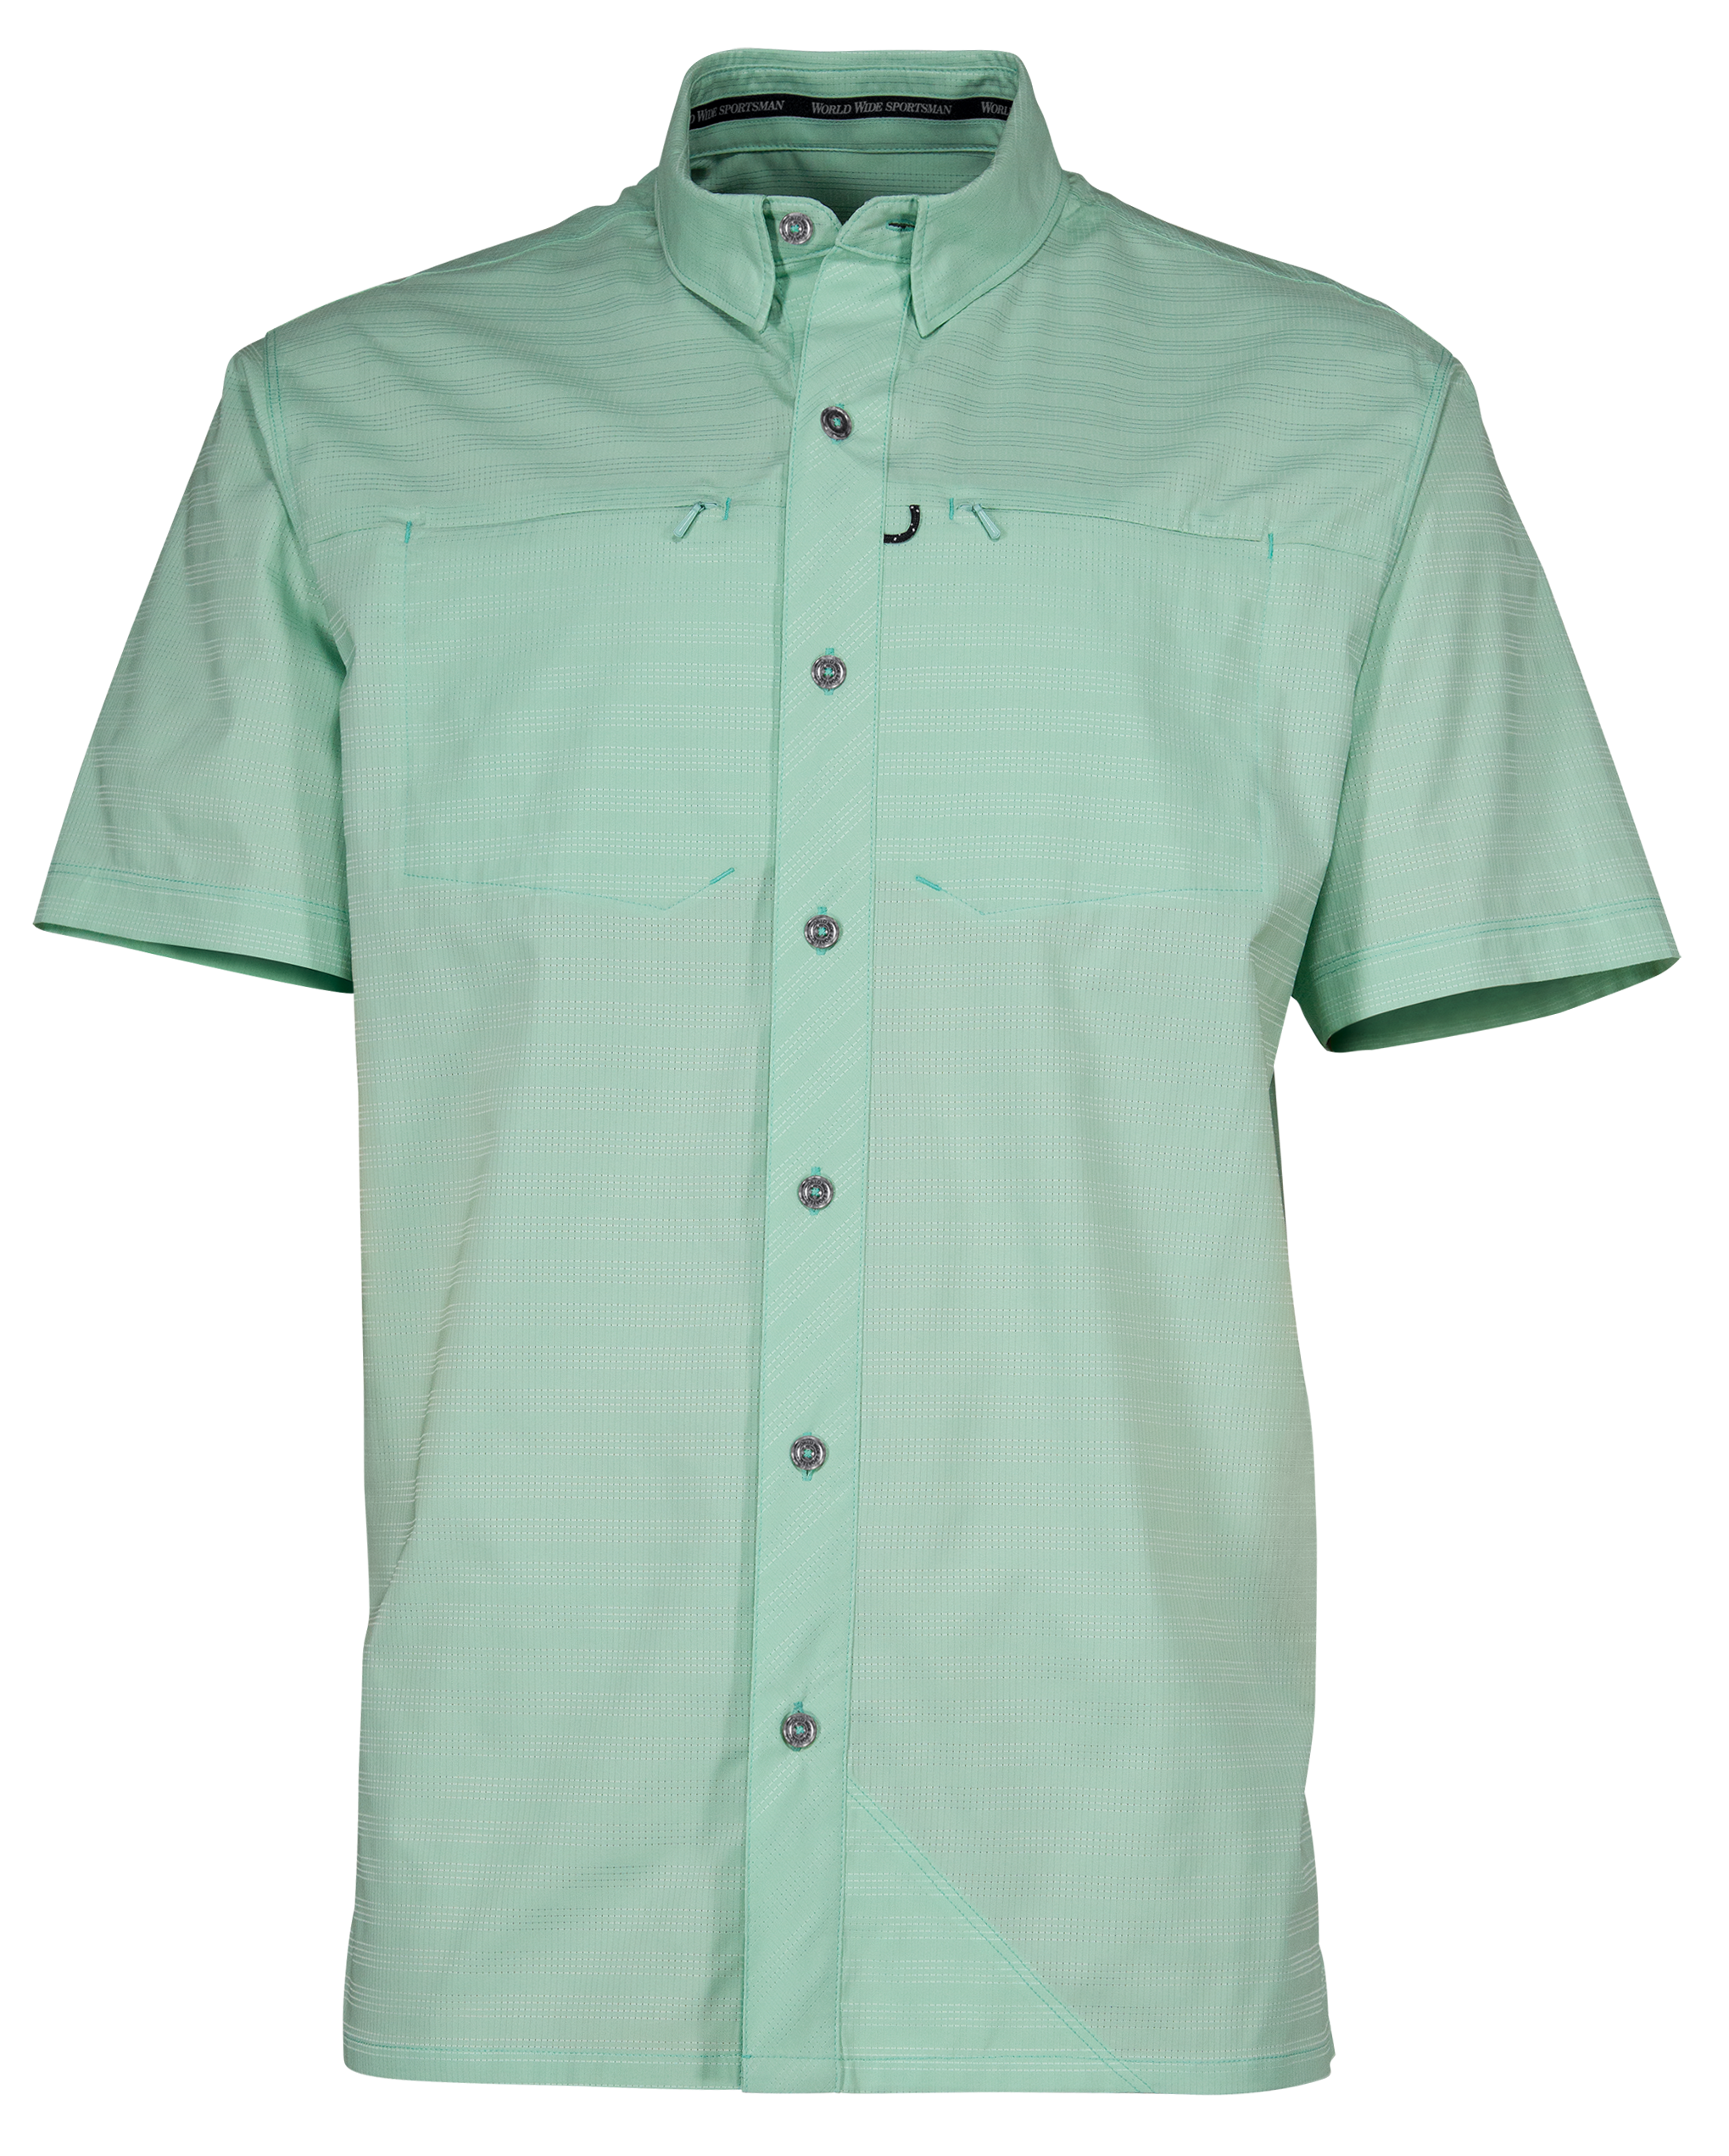 World Wide Sportsman Seacrest 2-Pocket Short-Sleeve Button-Down Shirt for Men - Lichen - XL